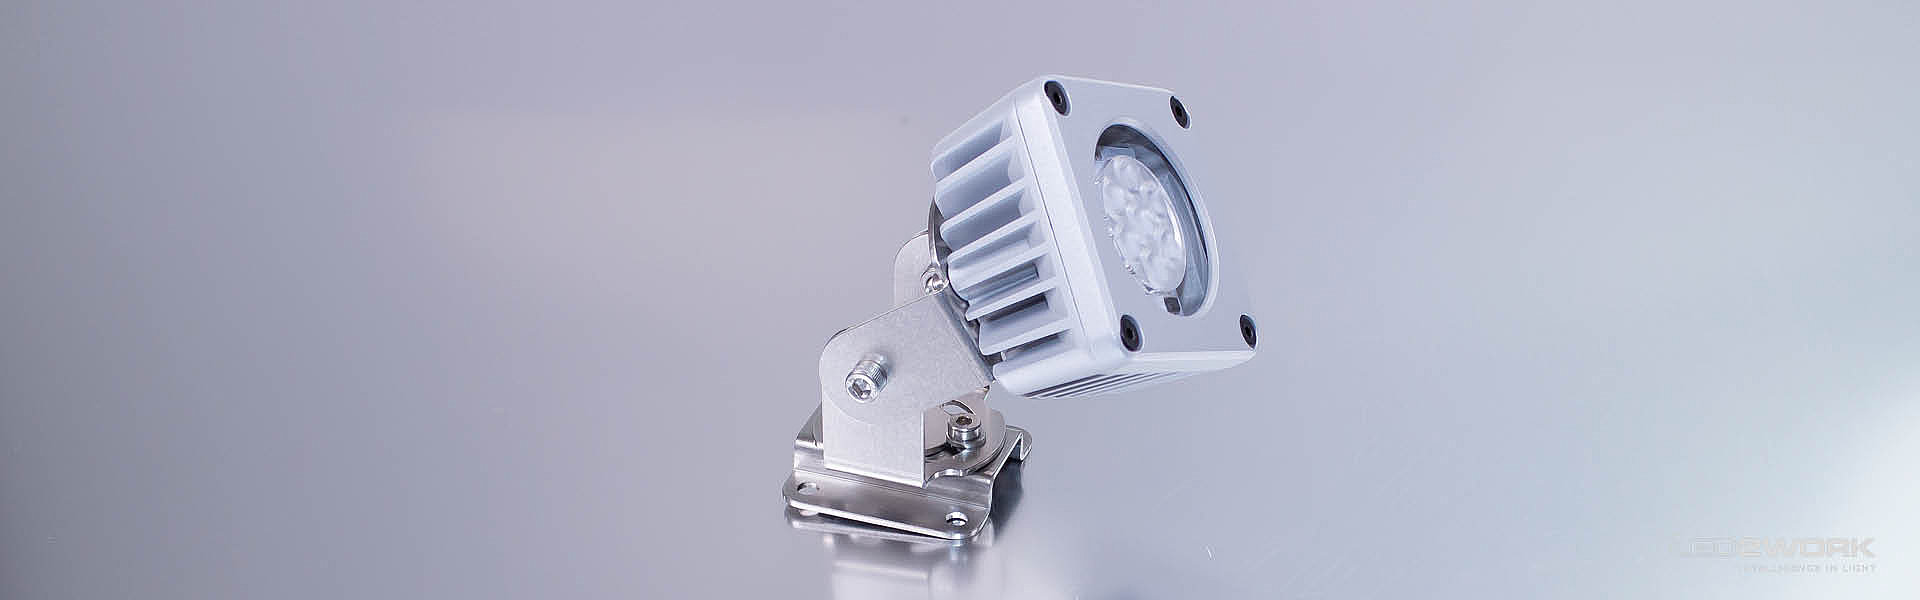 Ilustración de la luminaria LED para máquinas | Luminaria LED para tareas | CENALED SPOT - LED2WORK